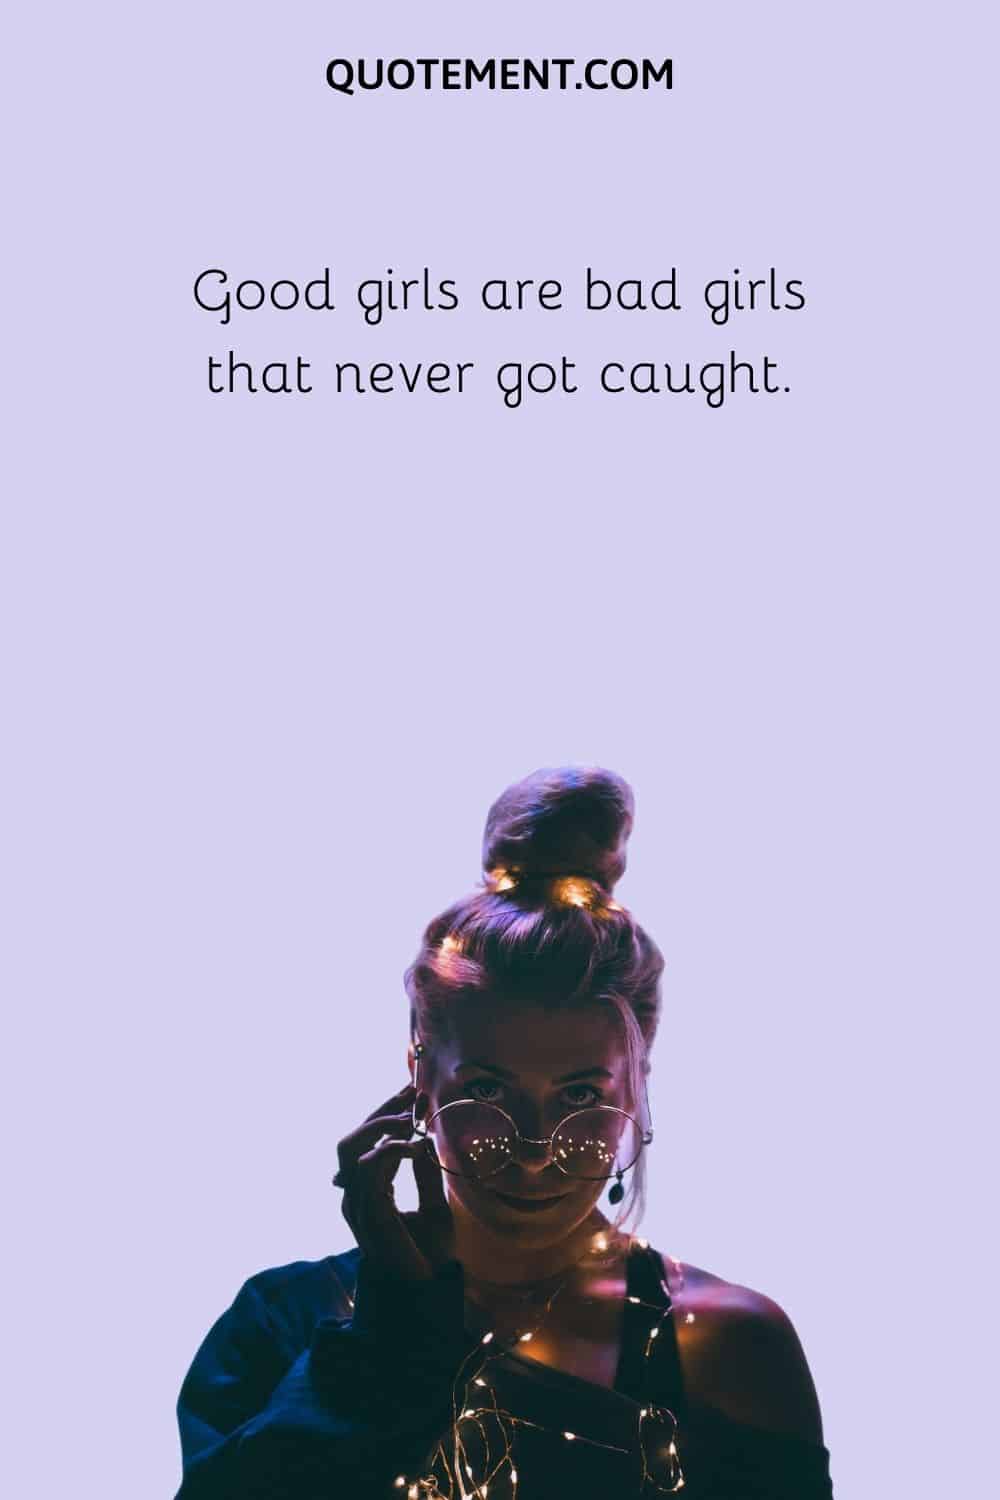 Good girls are bad girls that never got caught